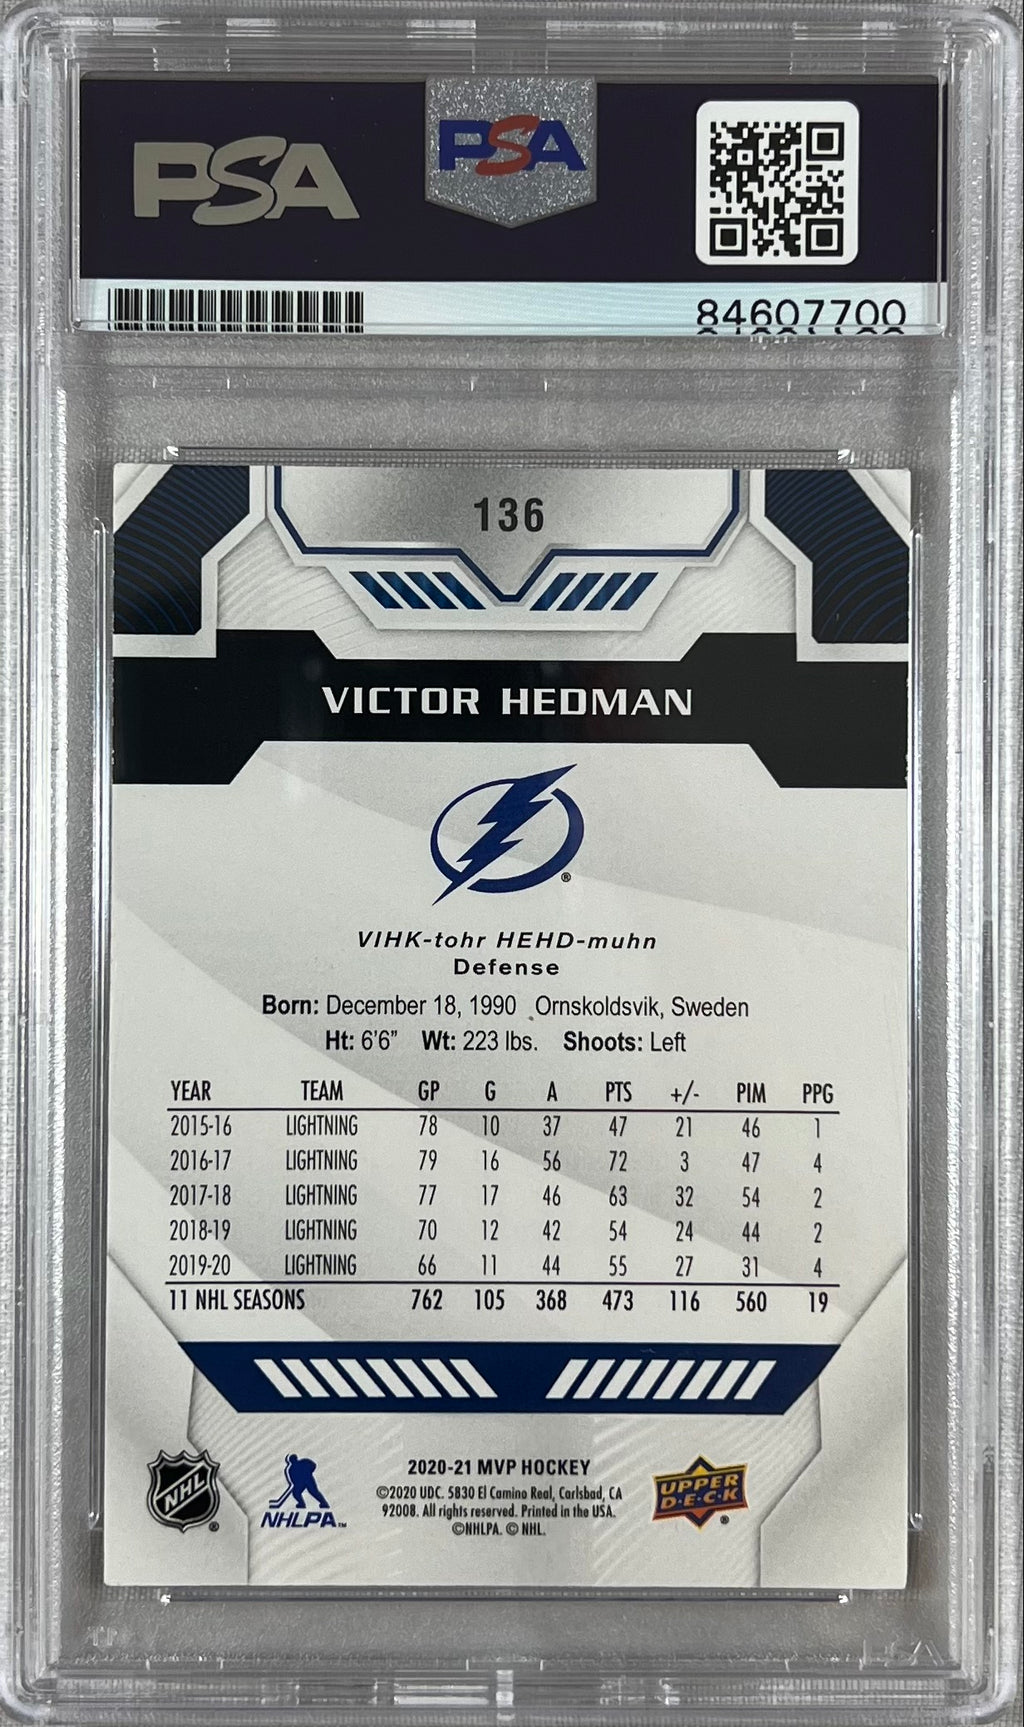 Victor Hedman auto 2020-21 Upper Deck MVP card #136 Lightning PSA Encapsulated